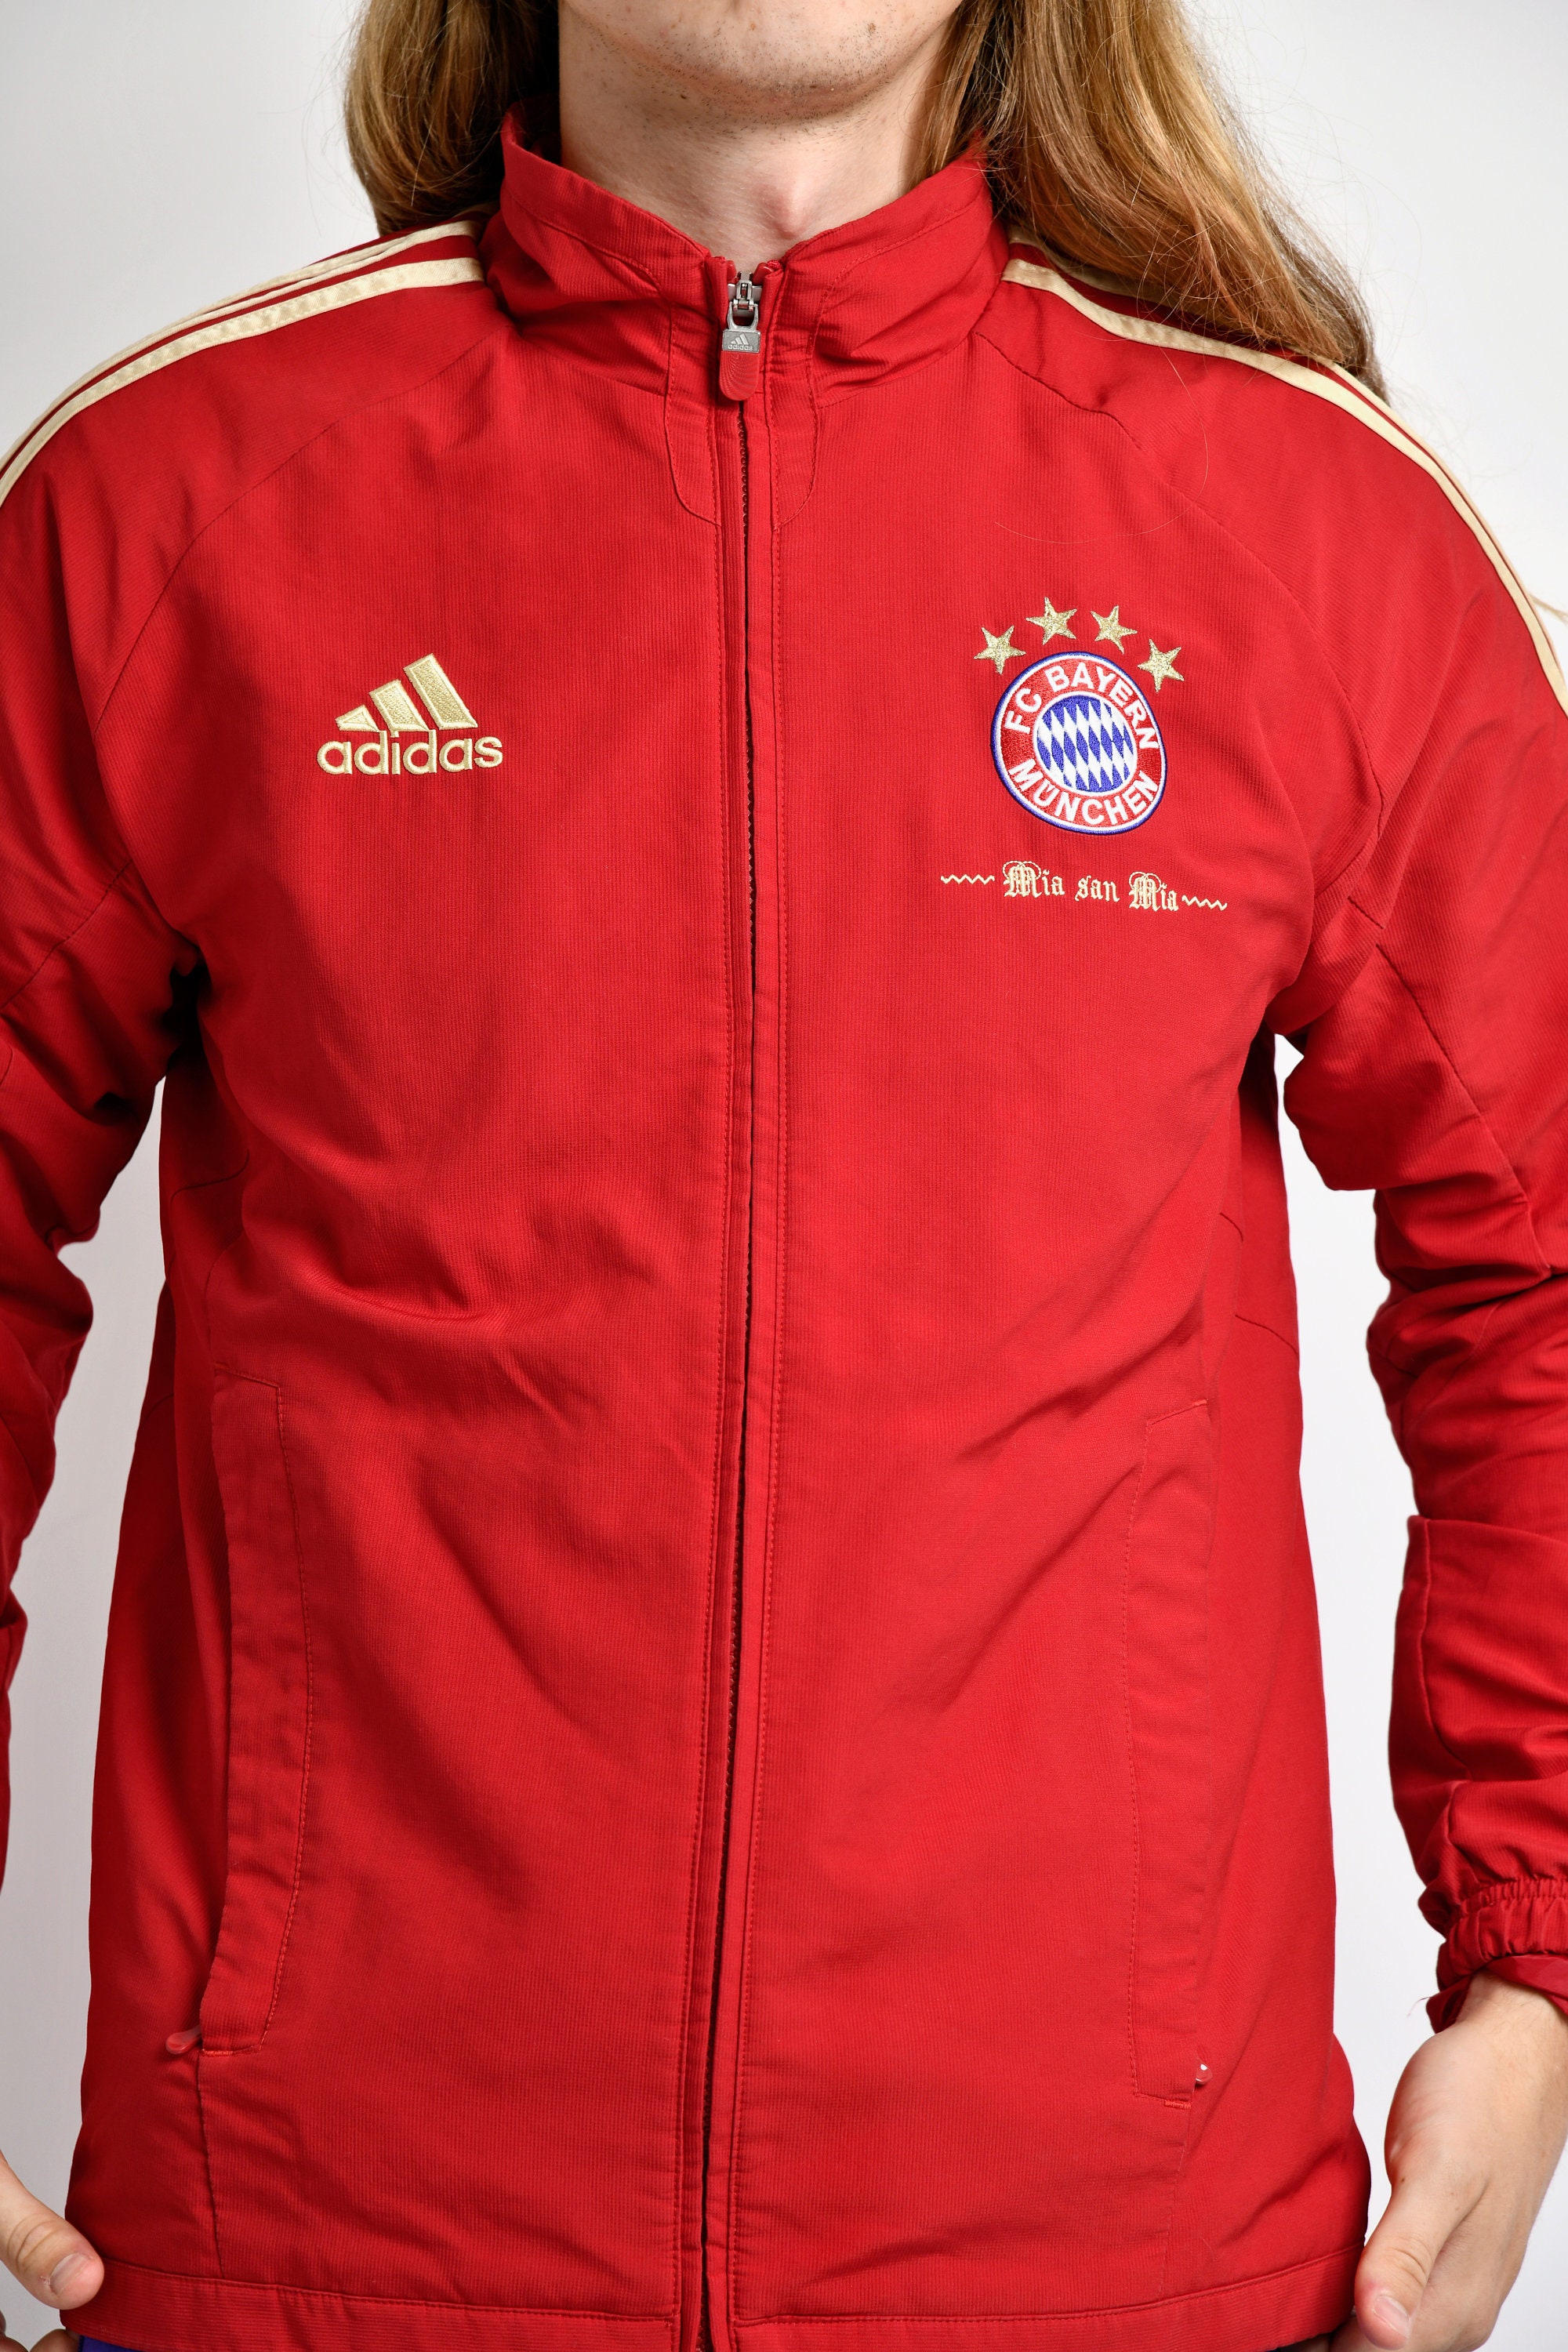 FC Bayern Munich Adidas windbreaker jacket red Men's - Etsy 日本